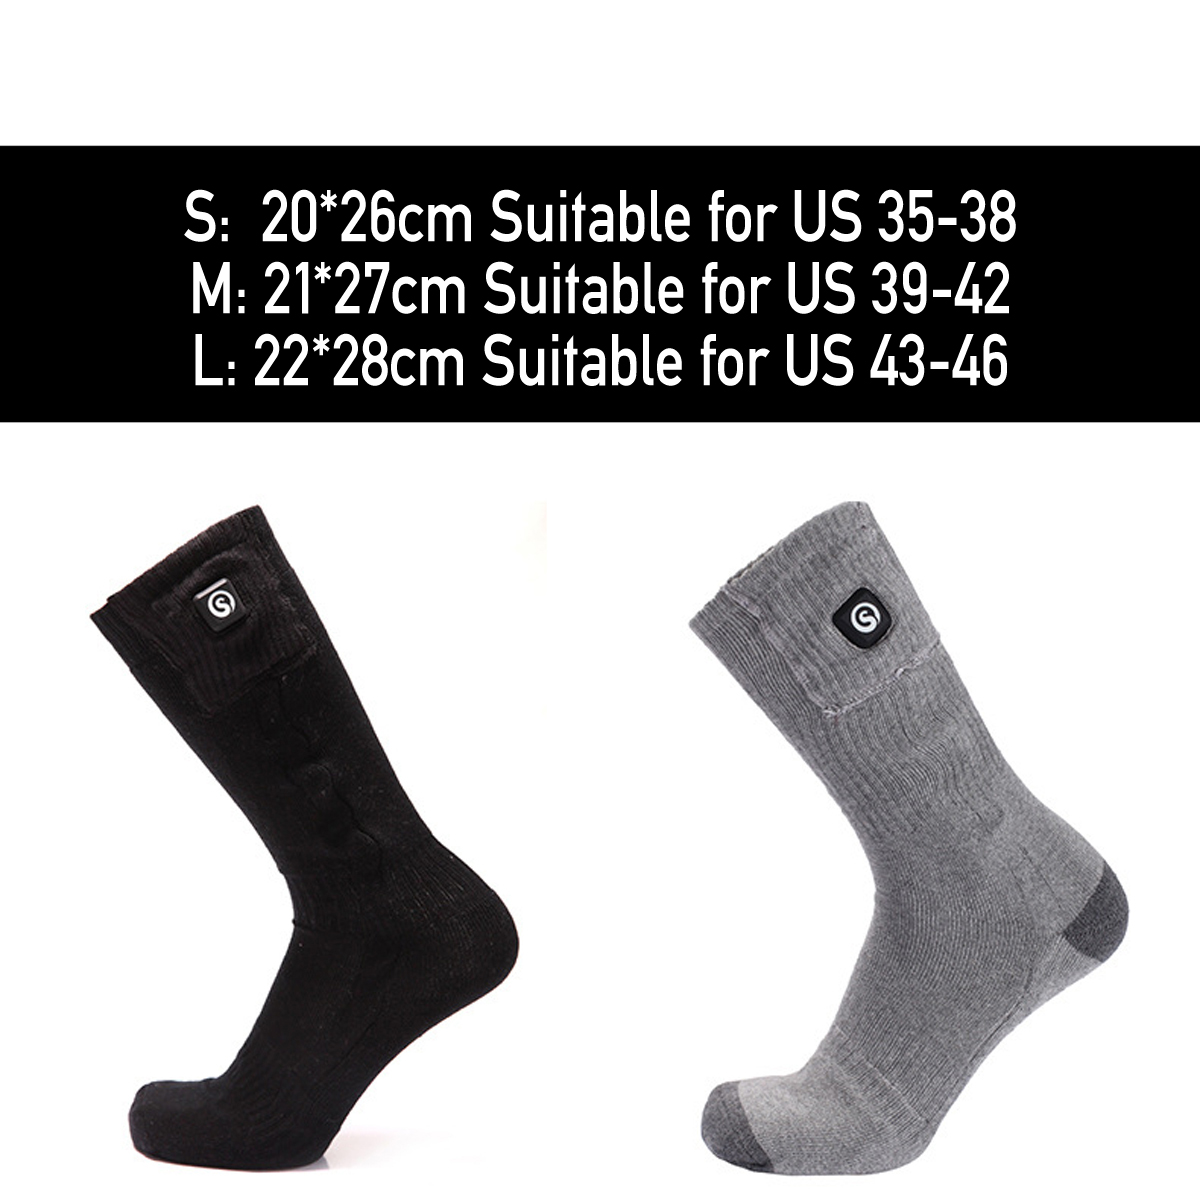 SAVIOR-74V-2200mAh-Electric-Heated-Socks-Rechargeable-Battery-Feet-Warmer-For-Skiing-1425472-8